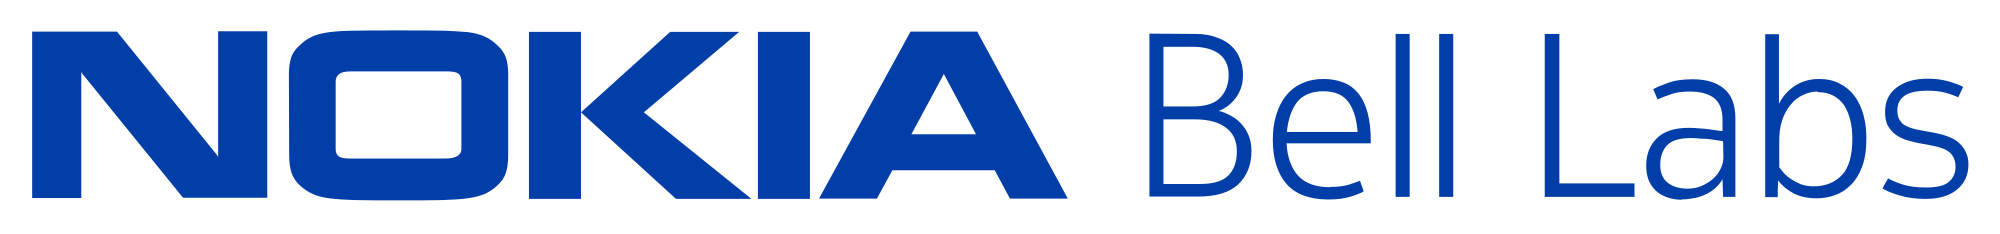 https://warrenenskat.com/wp-content/uploads/2019/01/Logo-Nokia_Bell_Labs_logo.svg_.png